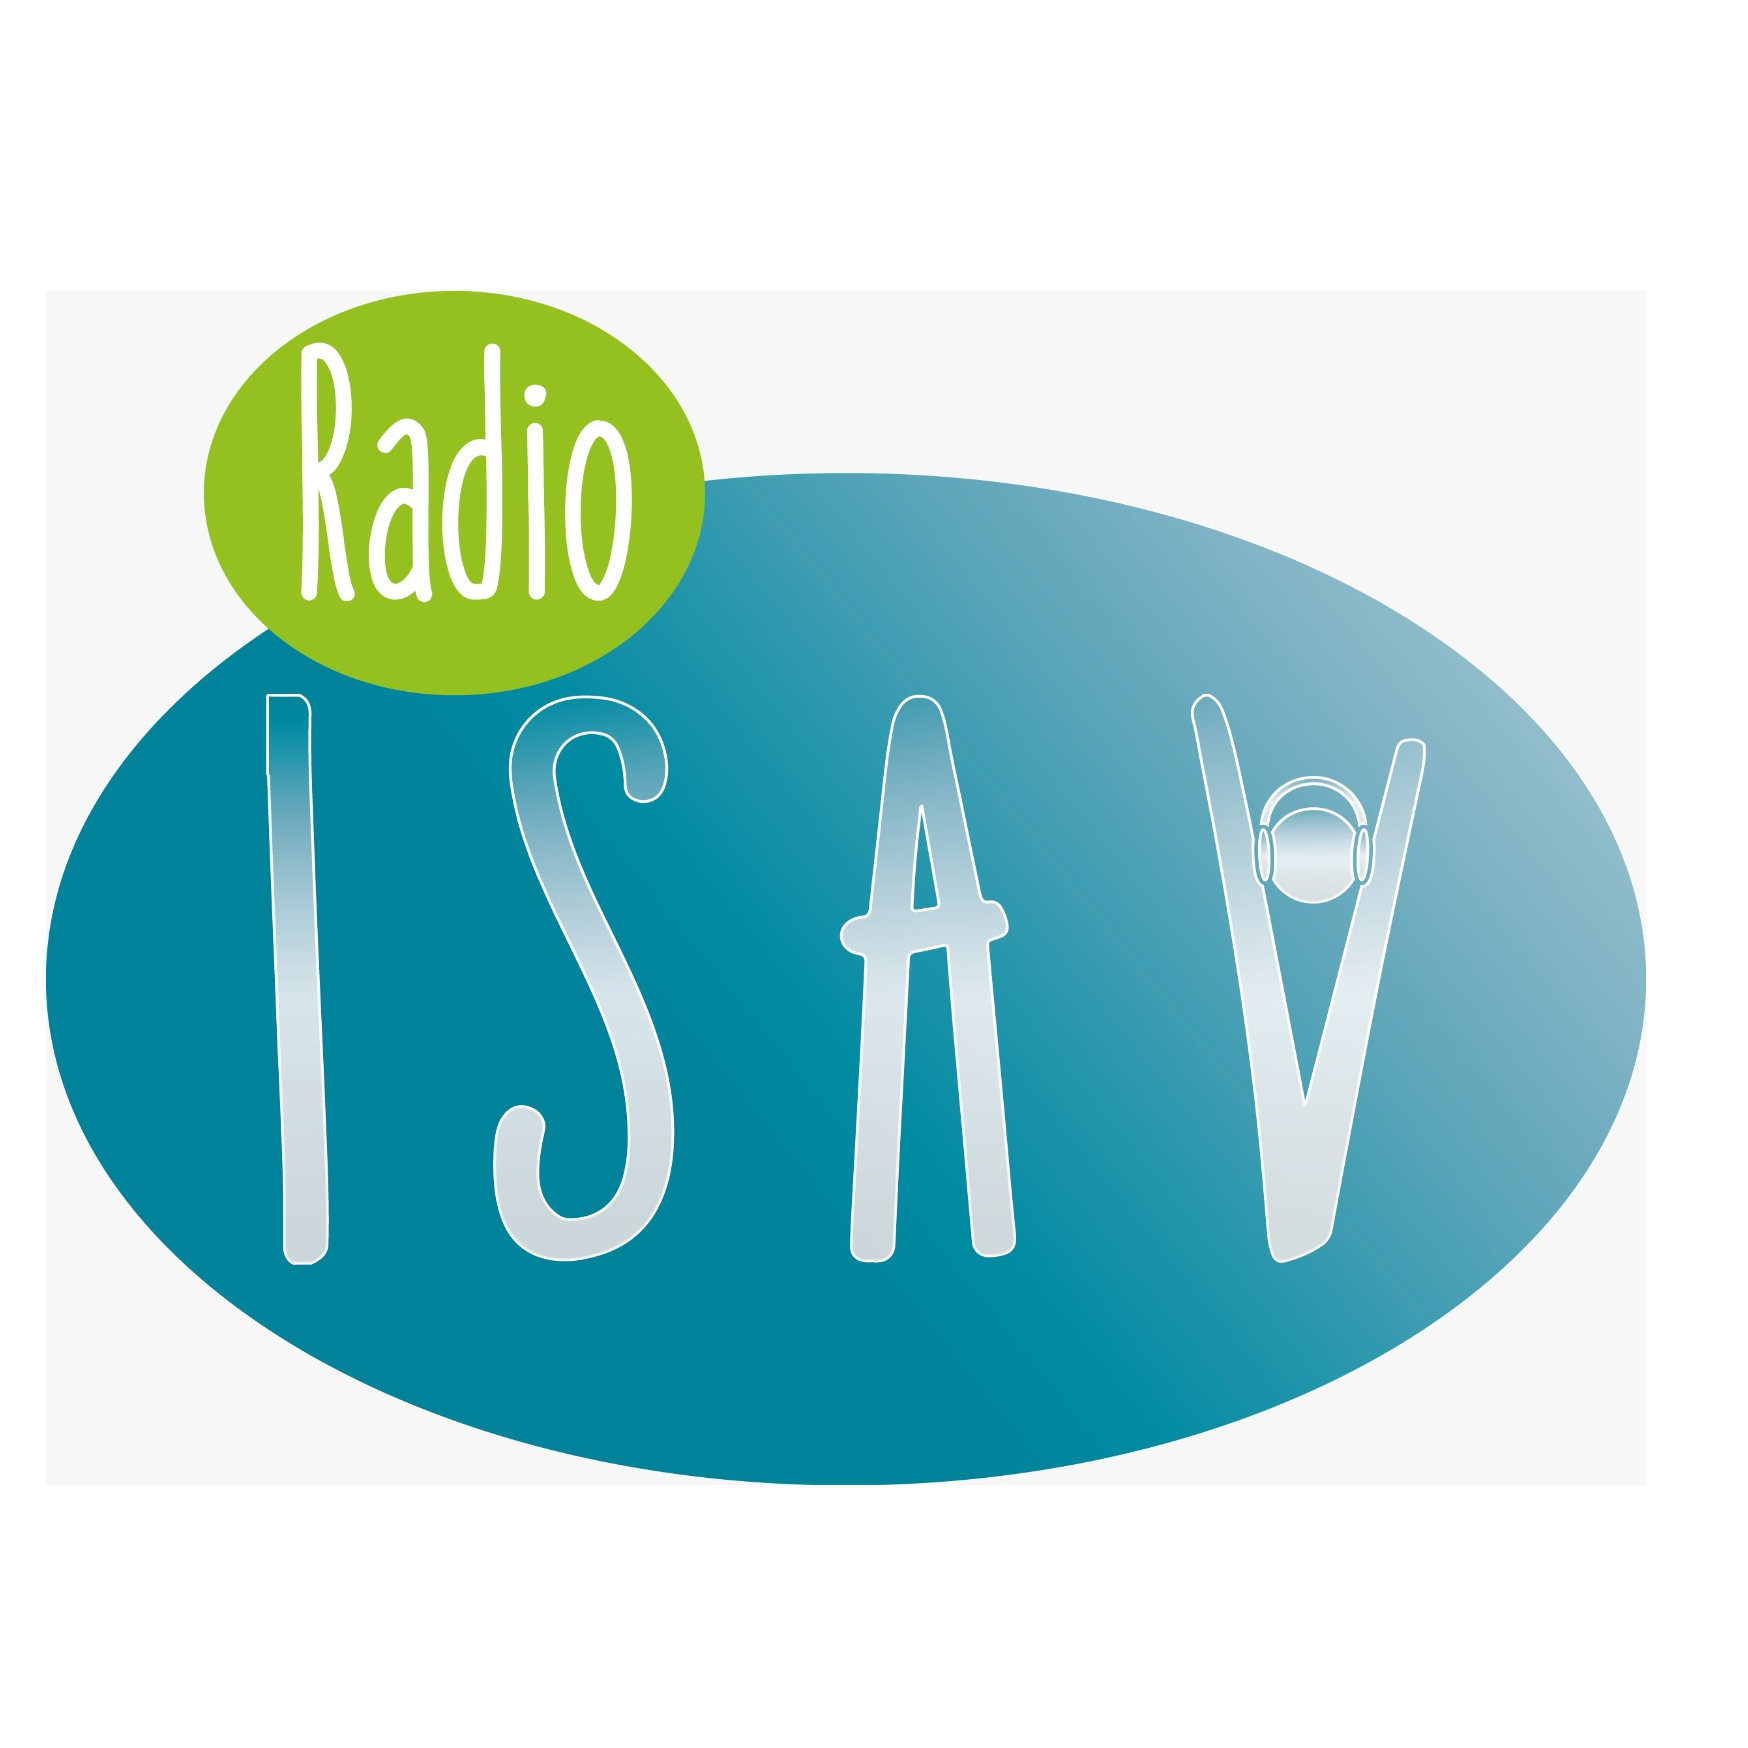 RADIO ISAV